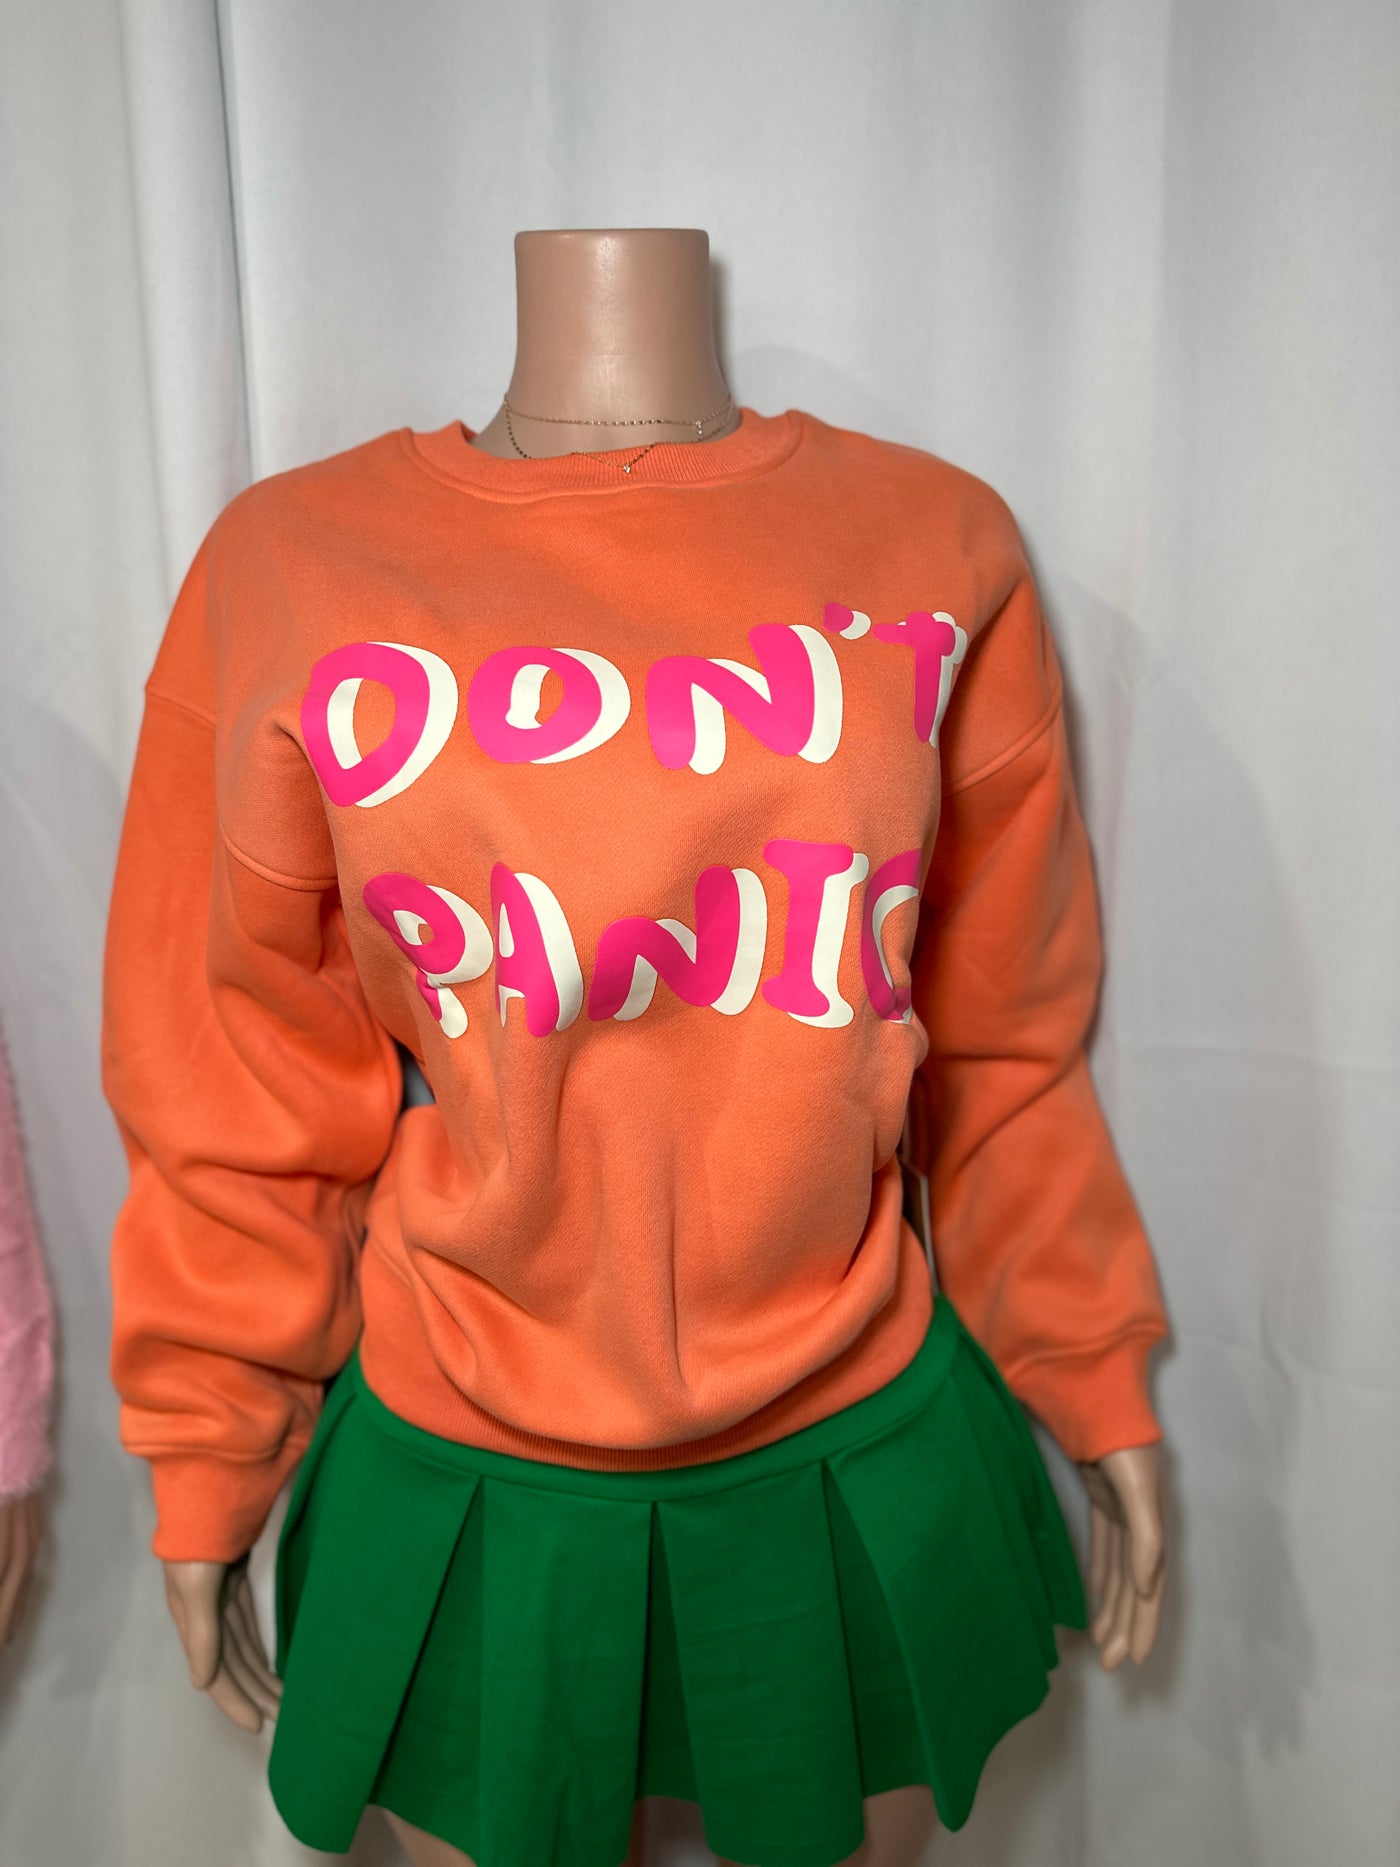 Don’t Panic Sweater